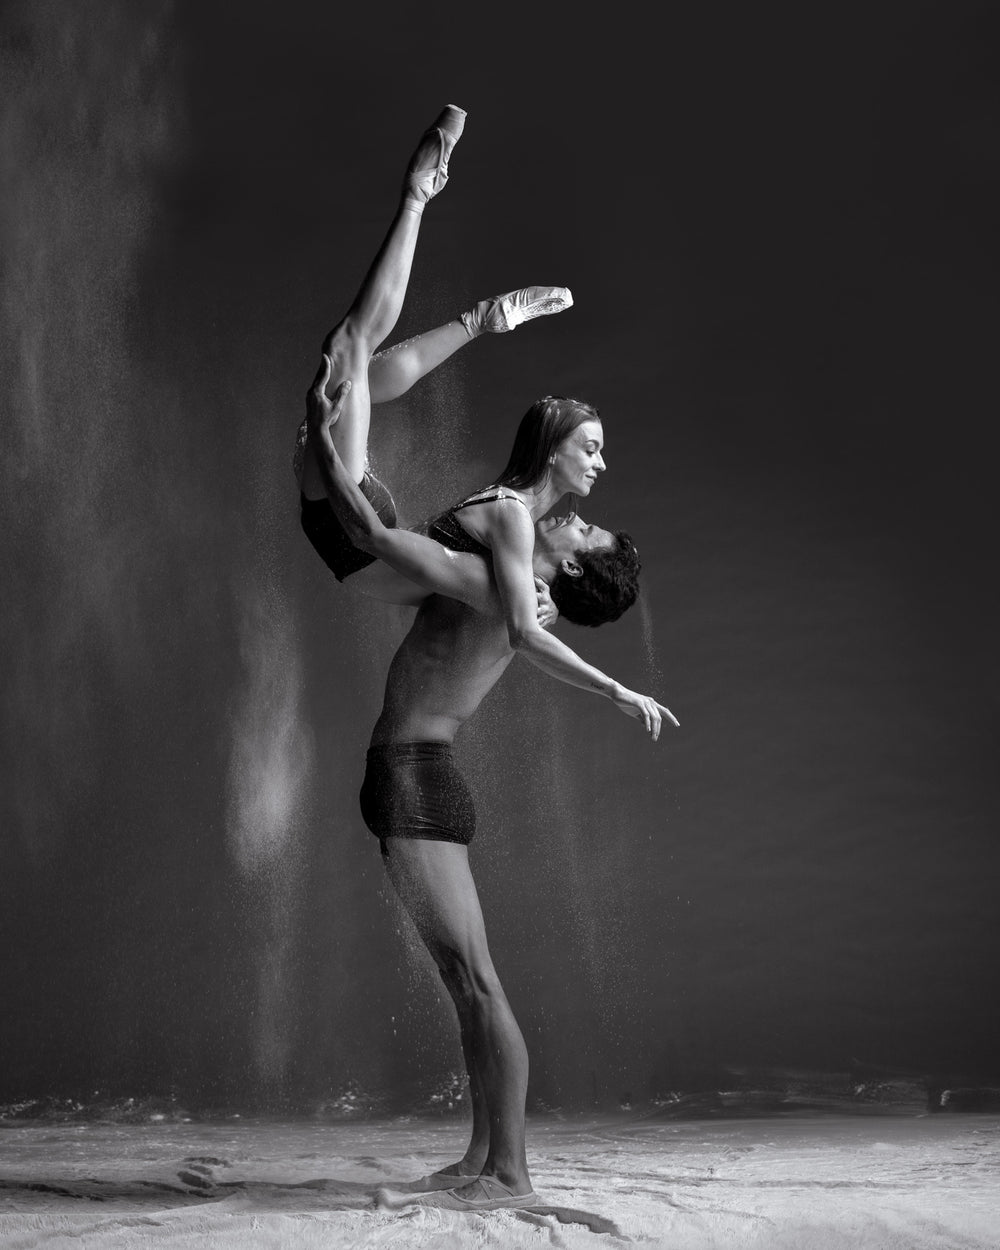 Art Dance Photography Prints - Purchase Online the artwork: Dancers in b&w by Francsico Estevez